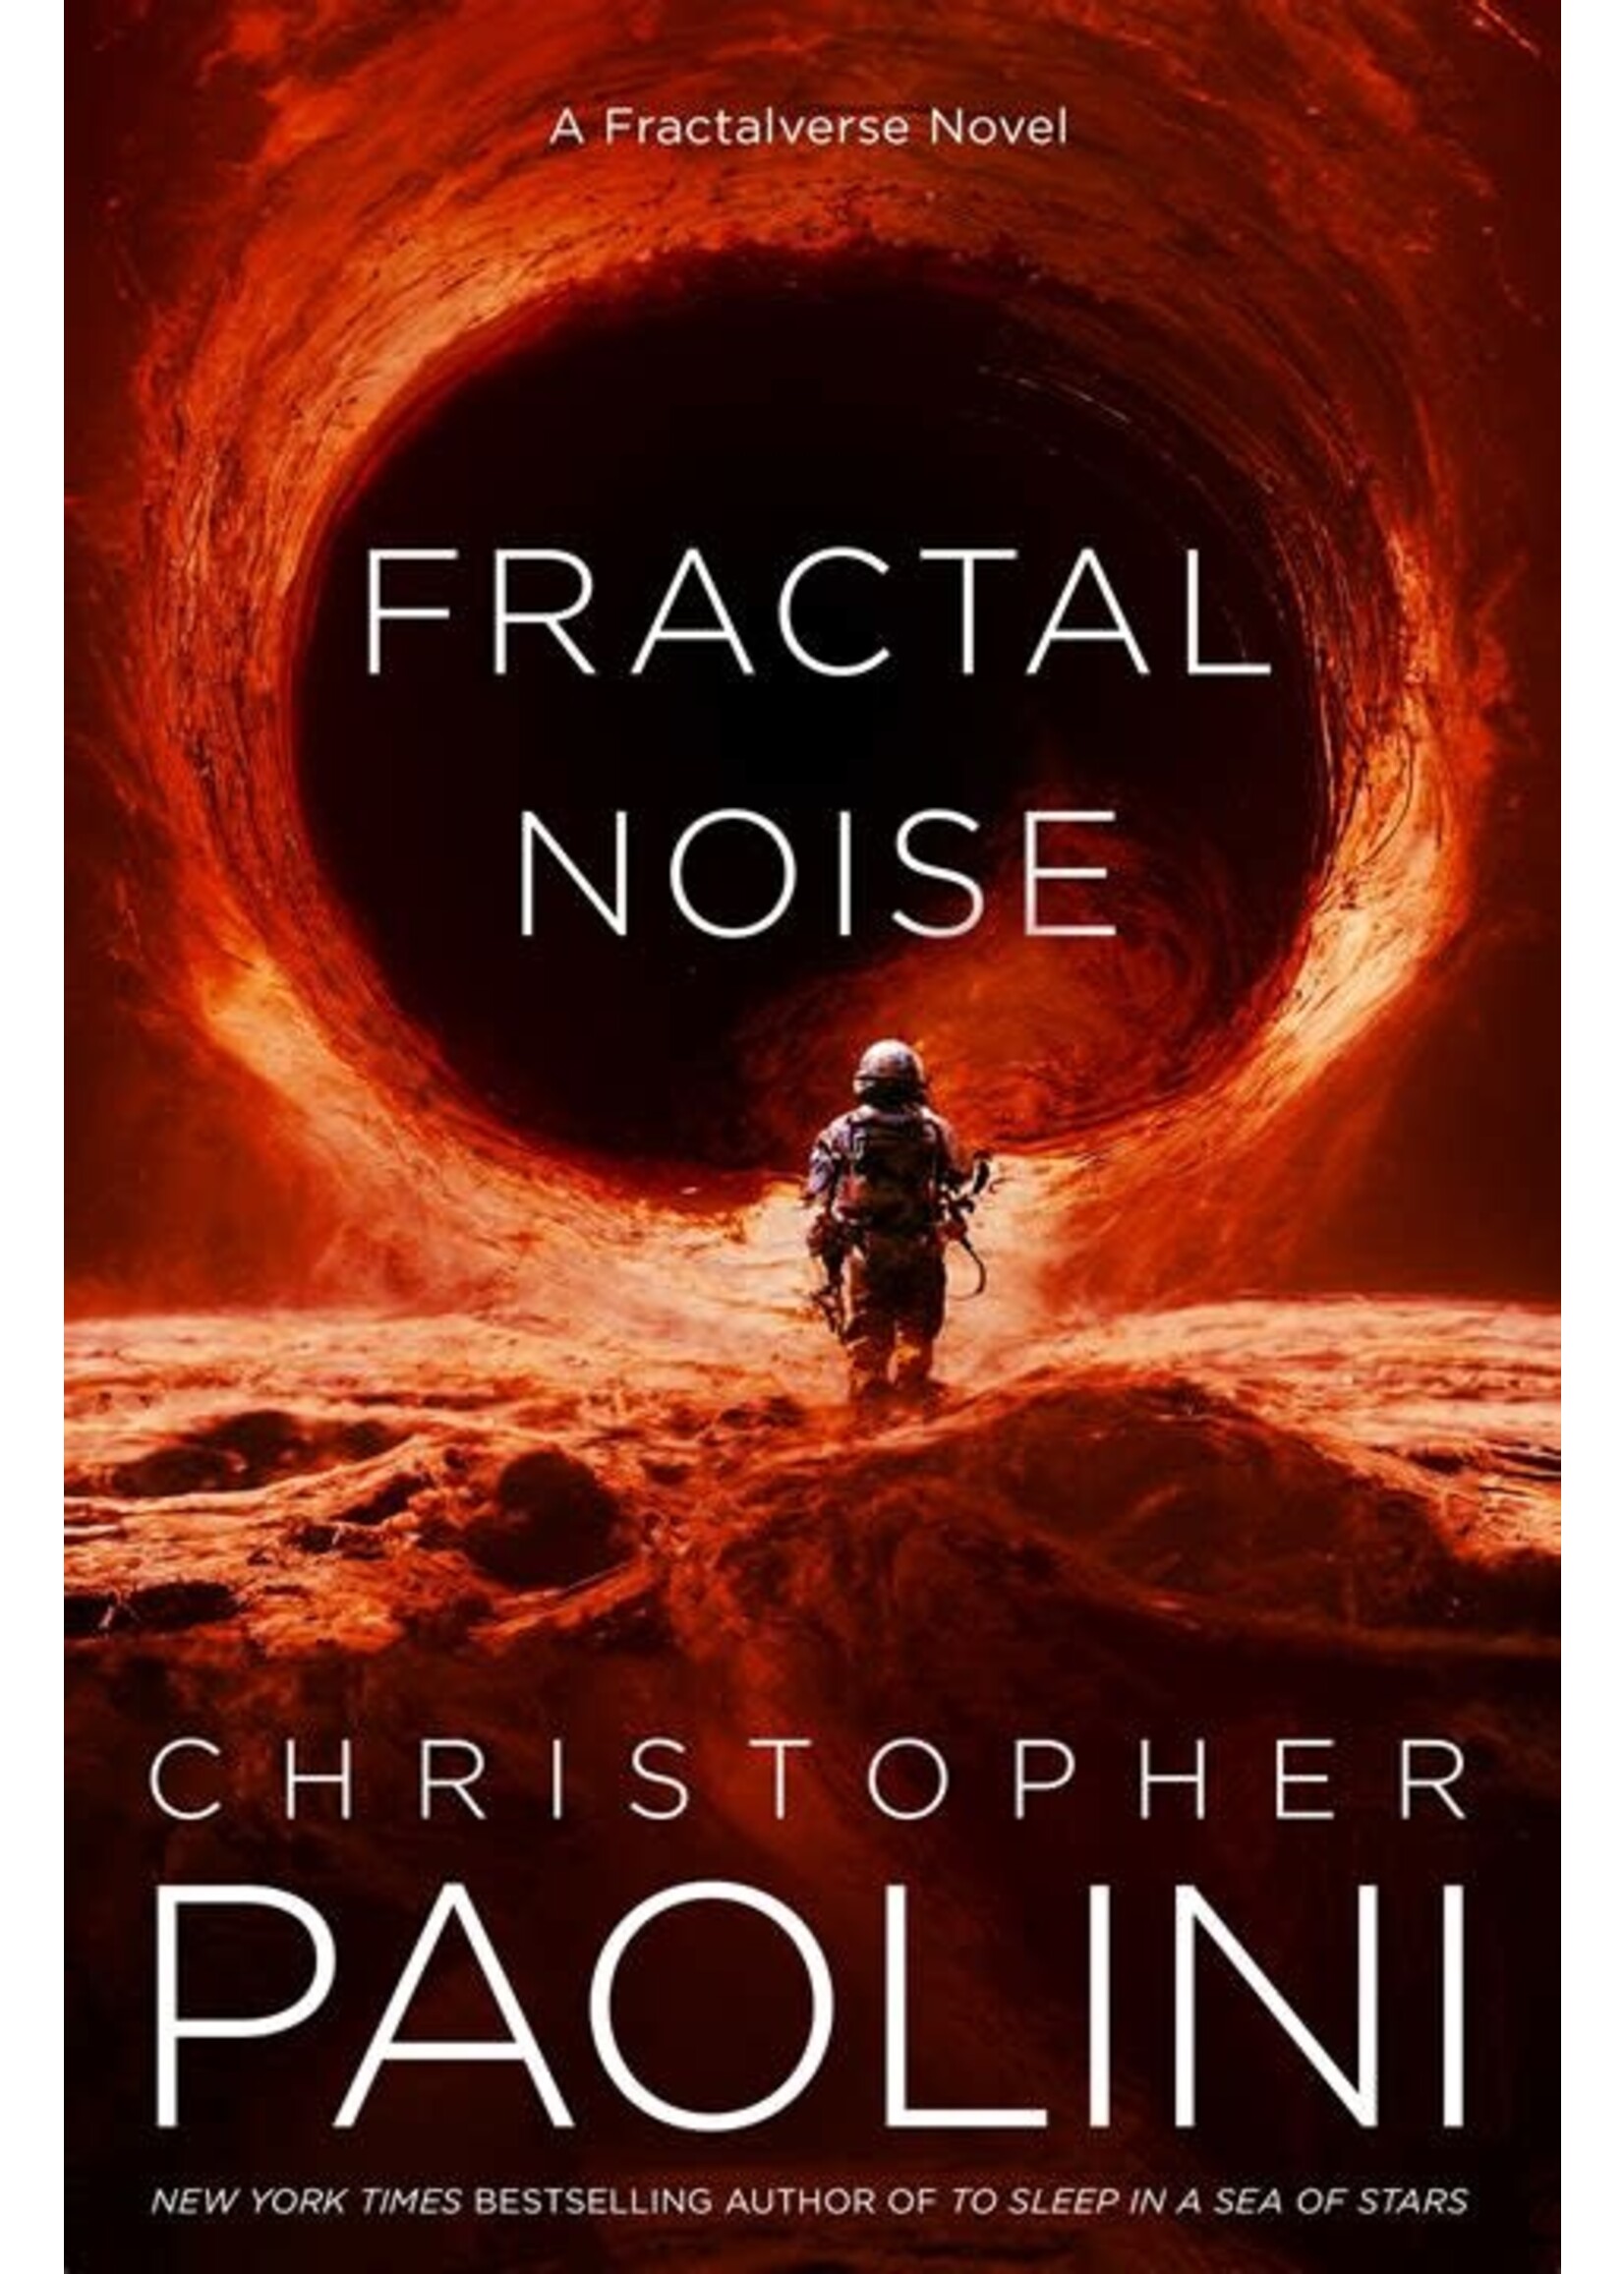 Fractal Noise (Fractalverse #0.5) by Christopher Paolini